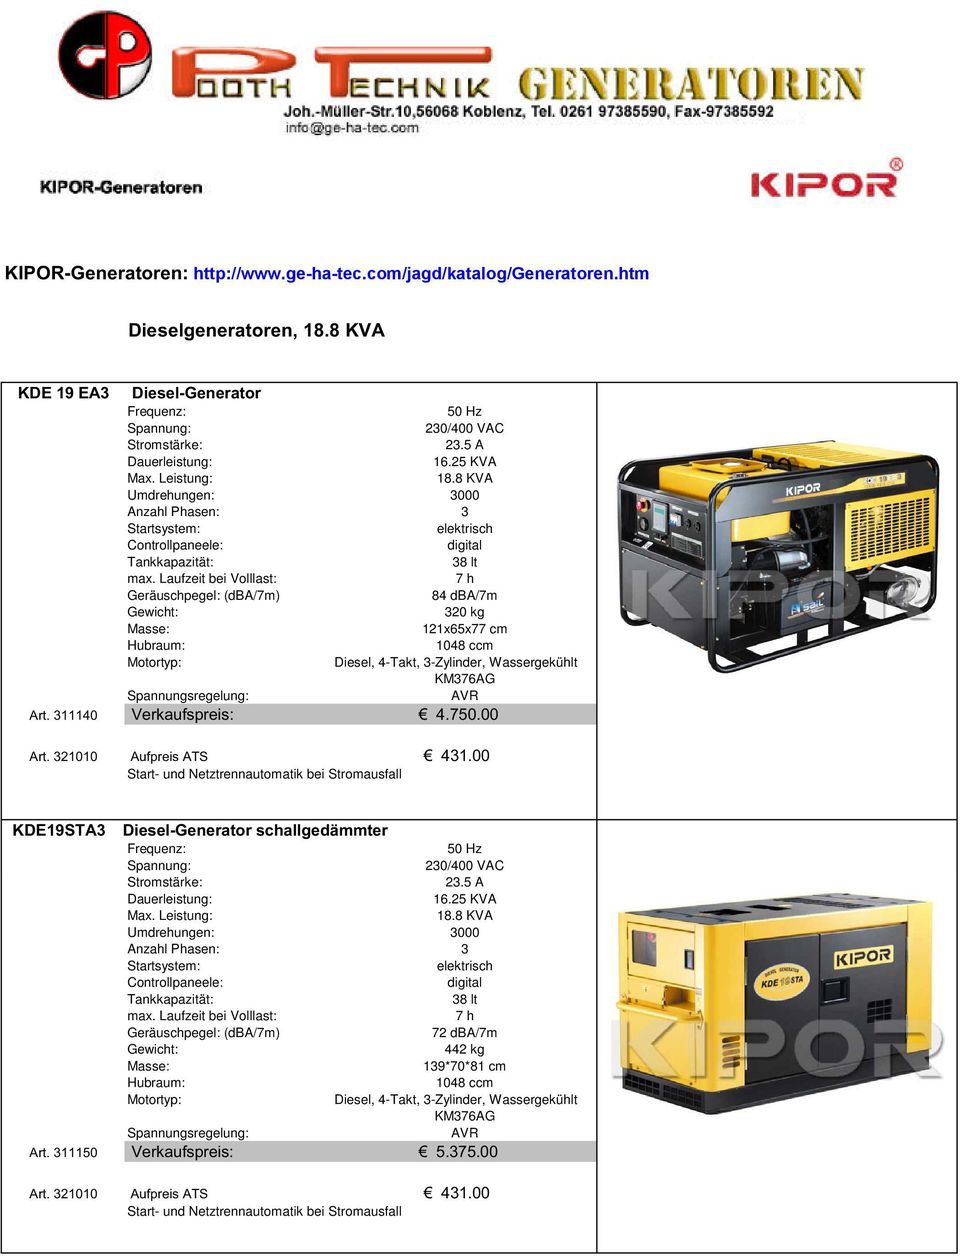 KM376AG Art. 311140 Verkaufspreis: 4.750.00 KDE19STA3 Diesel-Generator schallgedämmter 23.5 A 16.25 KVA 18.